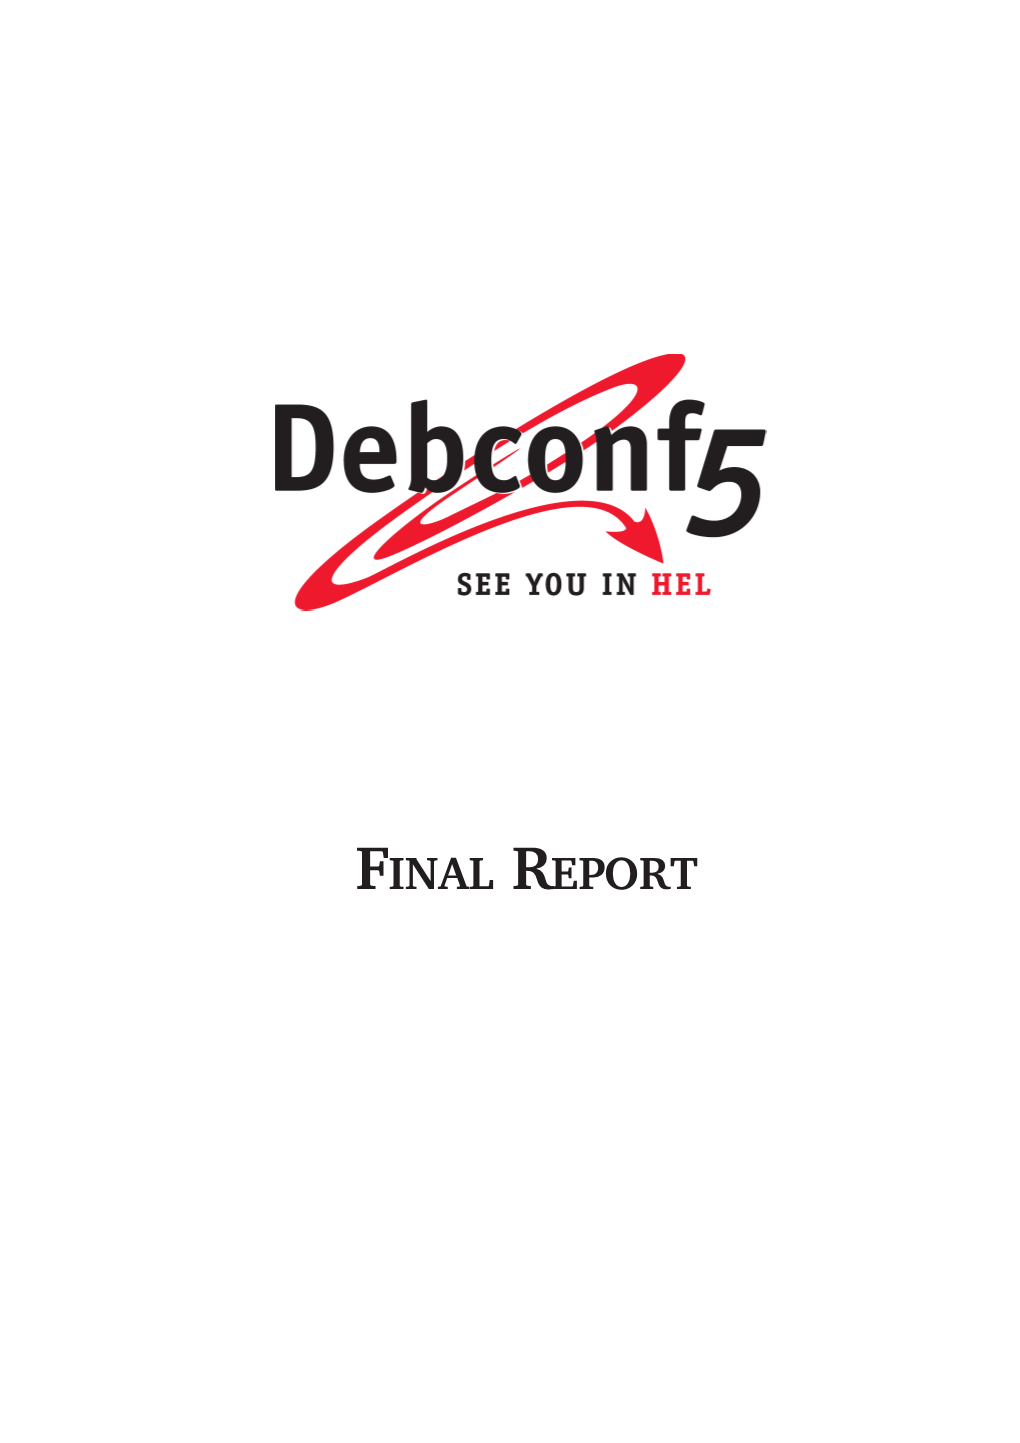 Debconf5 Final Report